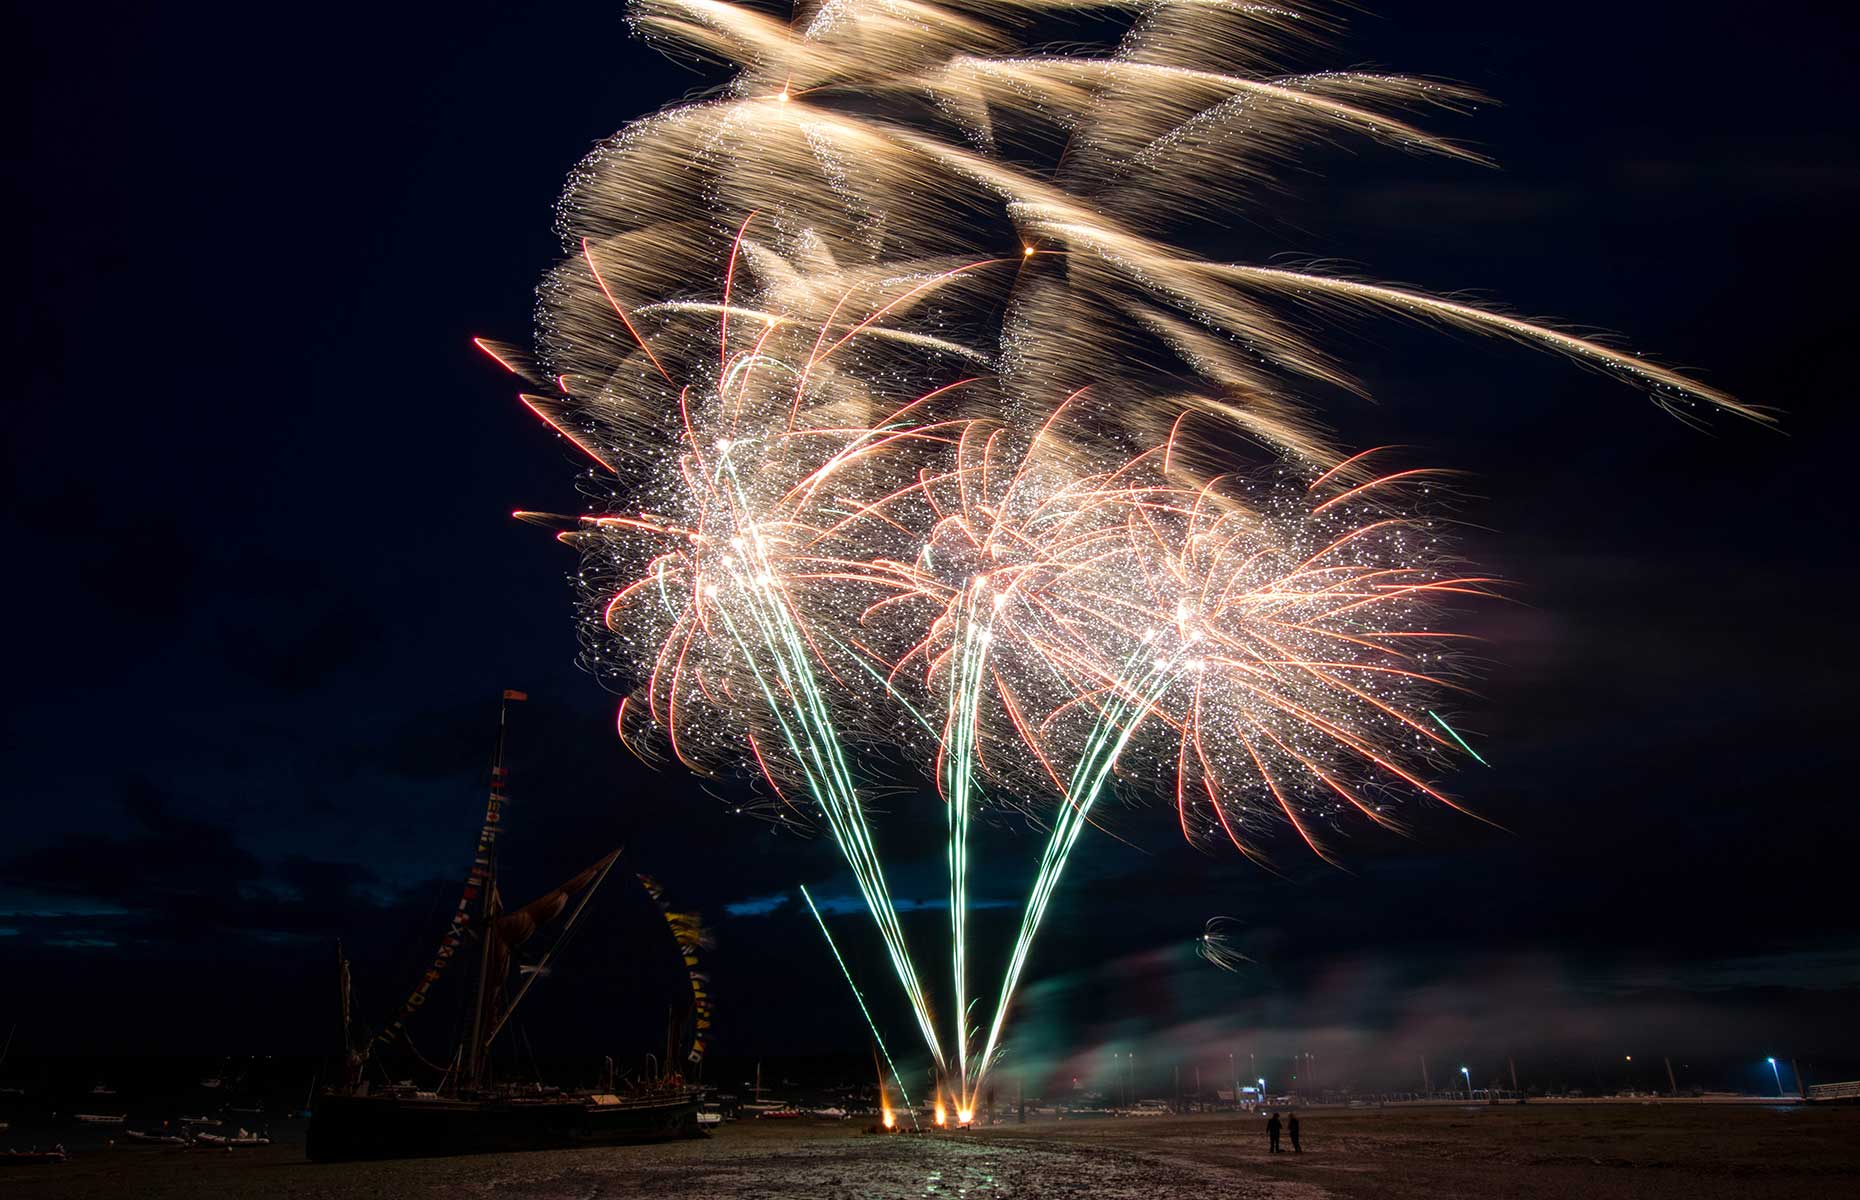 Fireworks at Mersea Regatta (Image: Joshua London/Shutterstock)